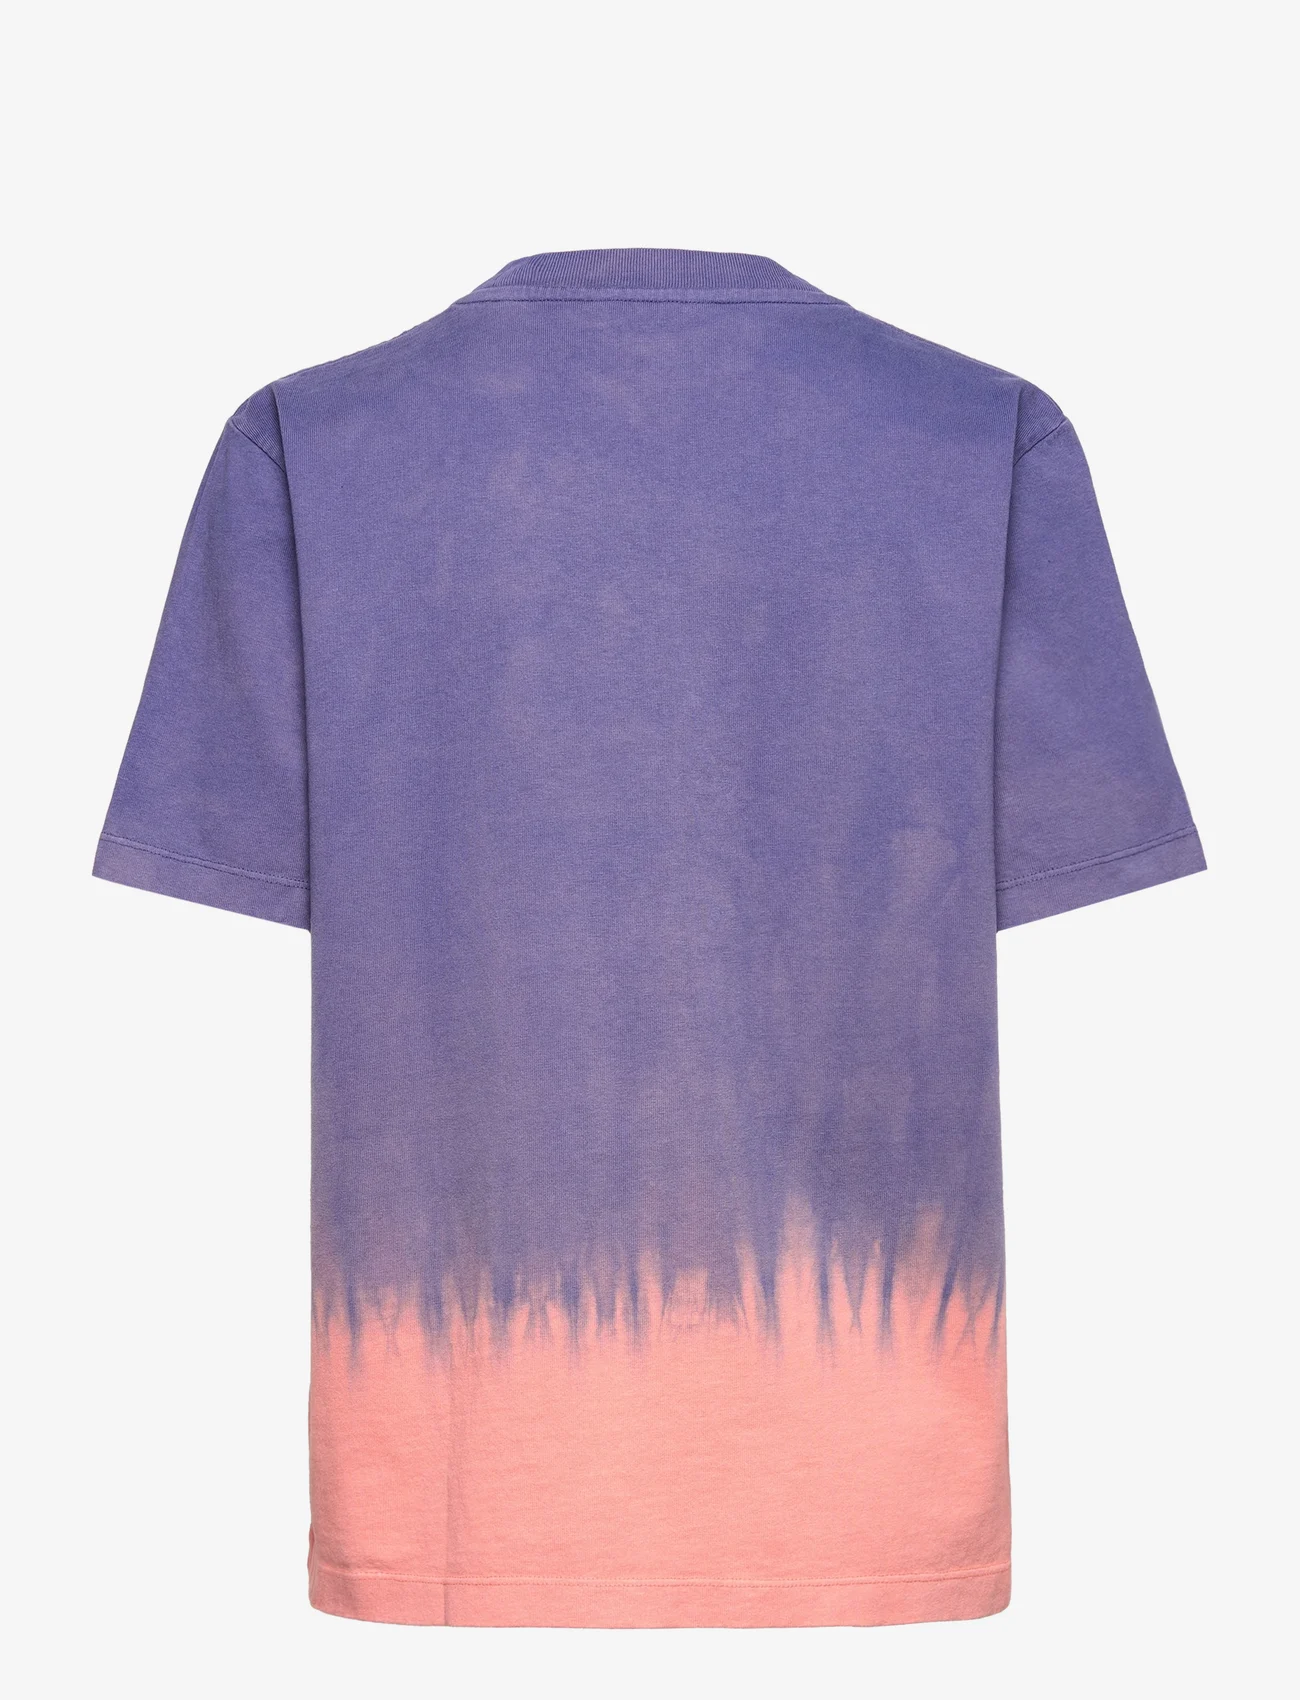 HOLZWEILER - Kjerag Dye Tee - t-shirts & tops - purple mix - 1